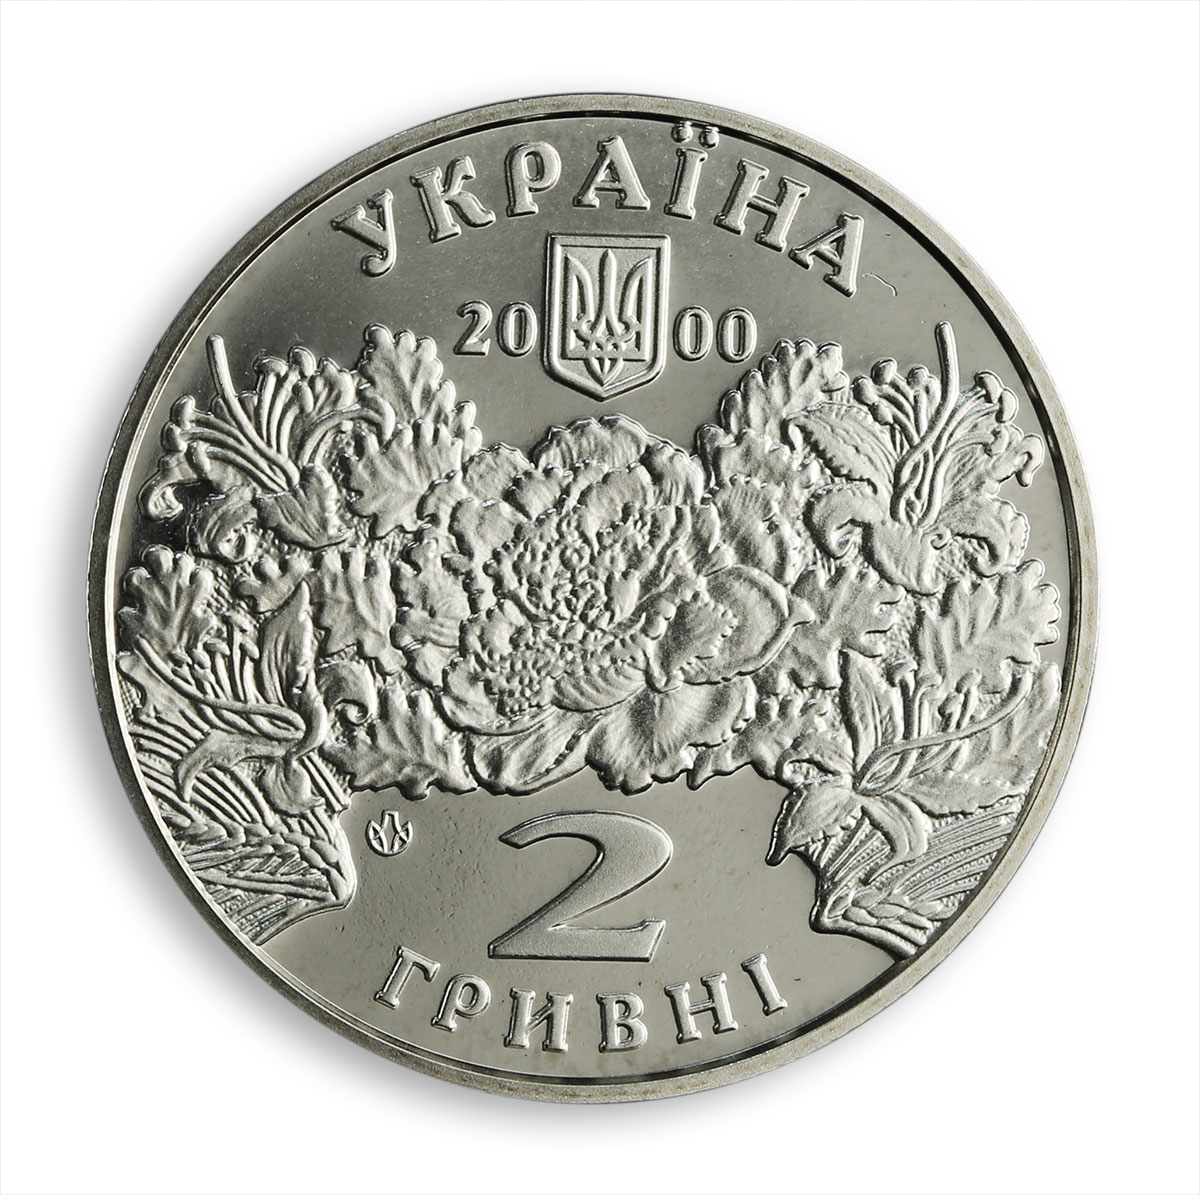 Ukraine 2 hryvnia Kateryna Bilokur outstanding folk artist UNC nickel coin 2000